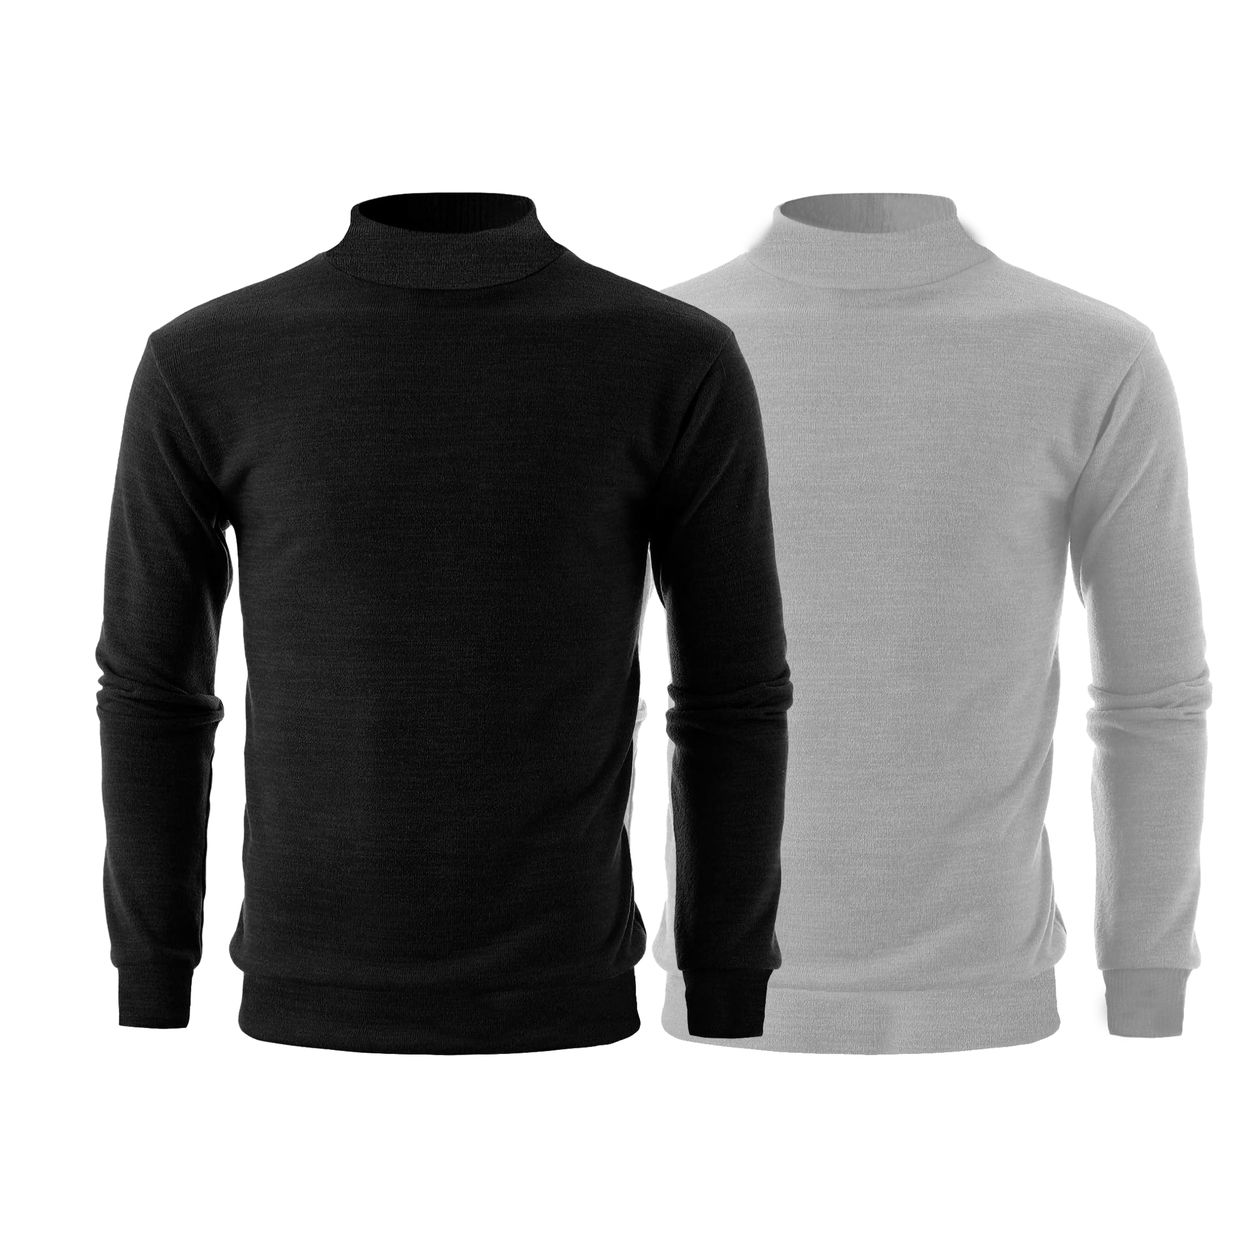 2-Pack: Men's Winter Warm Cozy Knit Slim Fit Mock Neck Sweater - White & Burgundy, Large